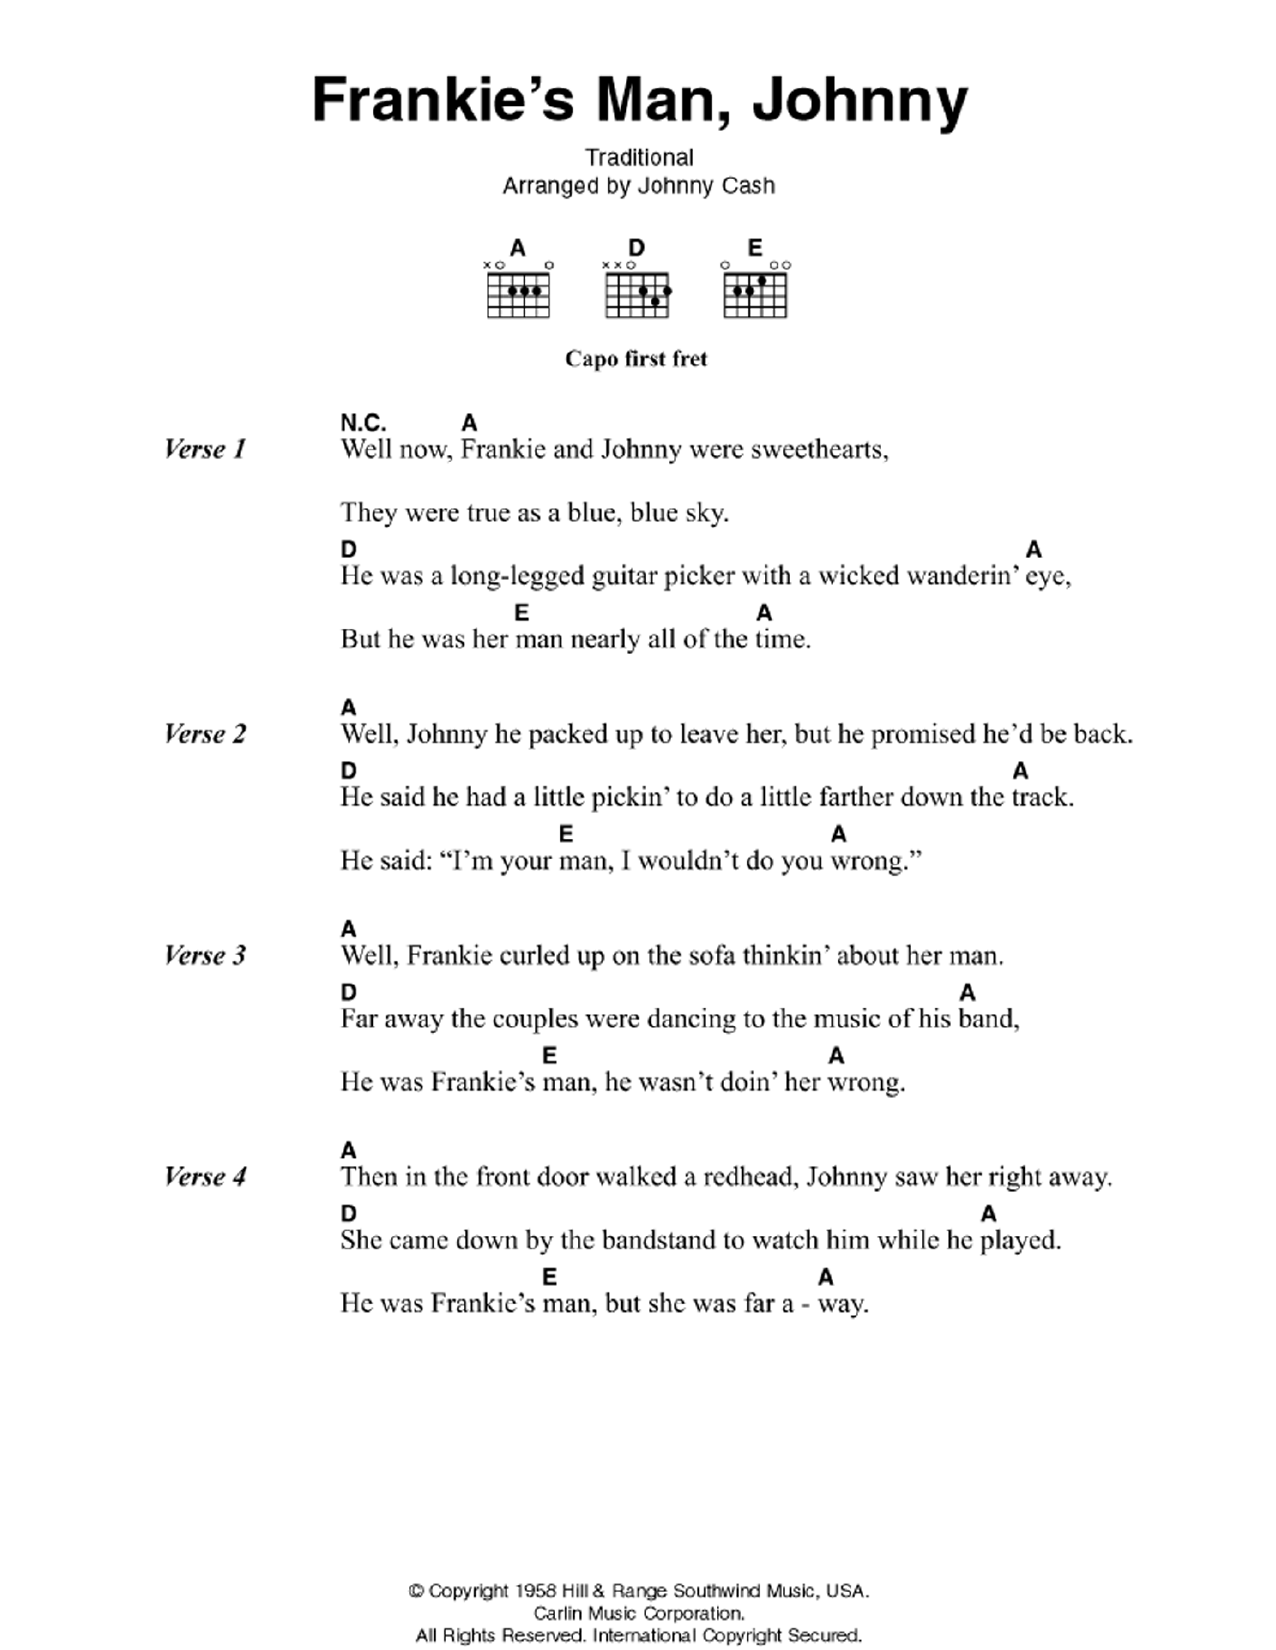 Johnny Cash Frankie's Man, Johnny Sheet Music Notes & Chords for Lyrics & Chords - Download or Print PDF